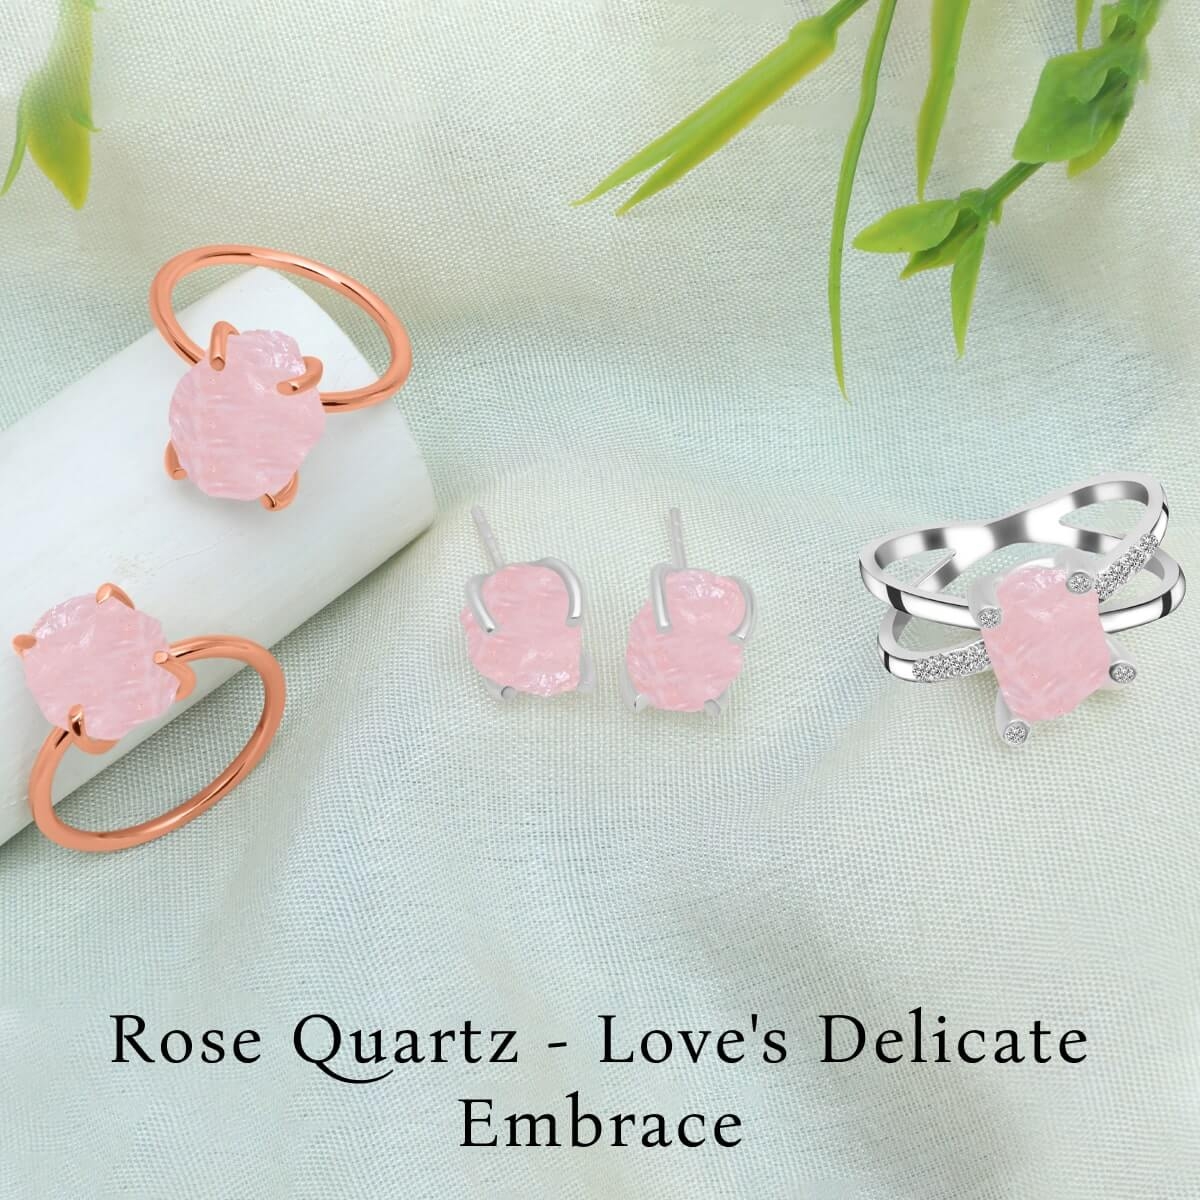 Purchase the High-Quality Rose Quartz Engagement Rings | GLAMIRA.com